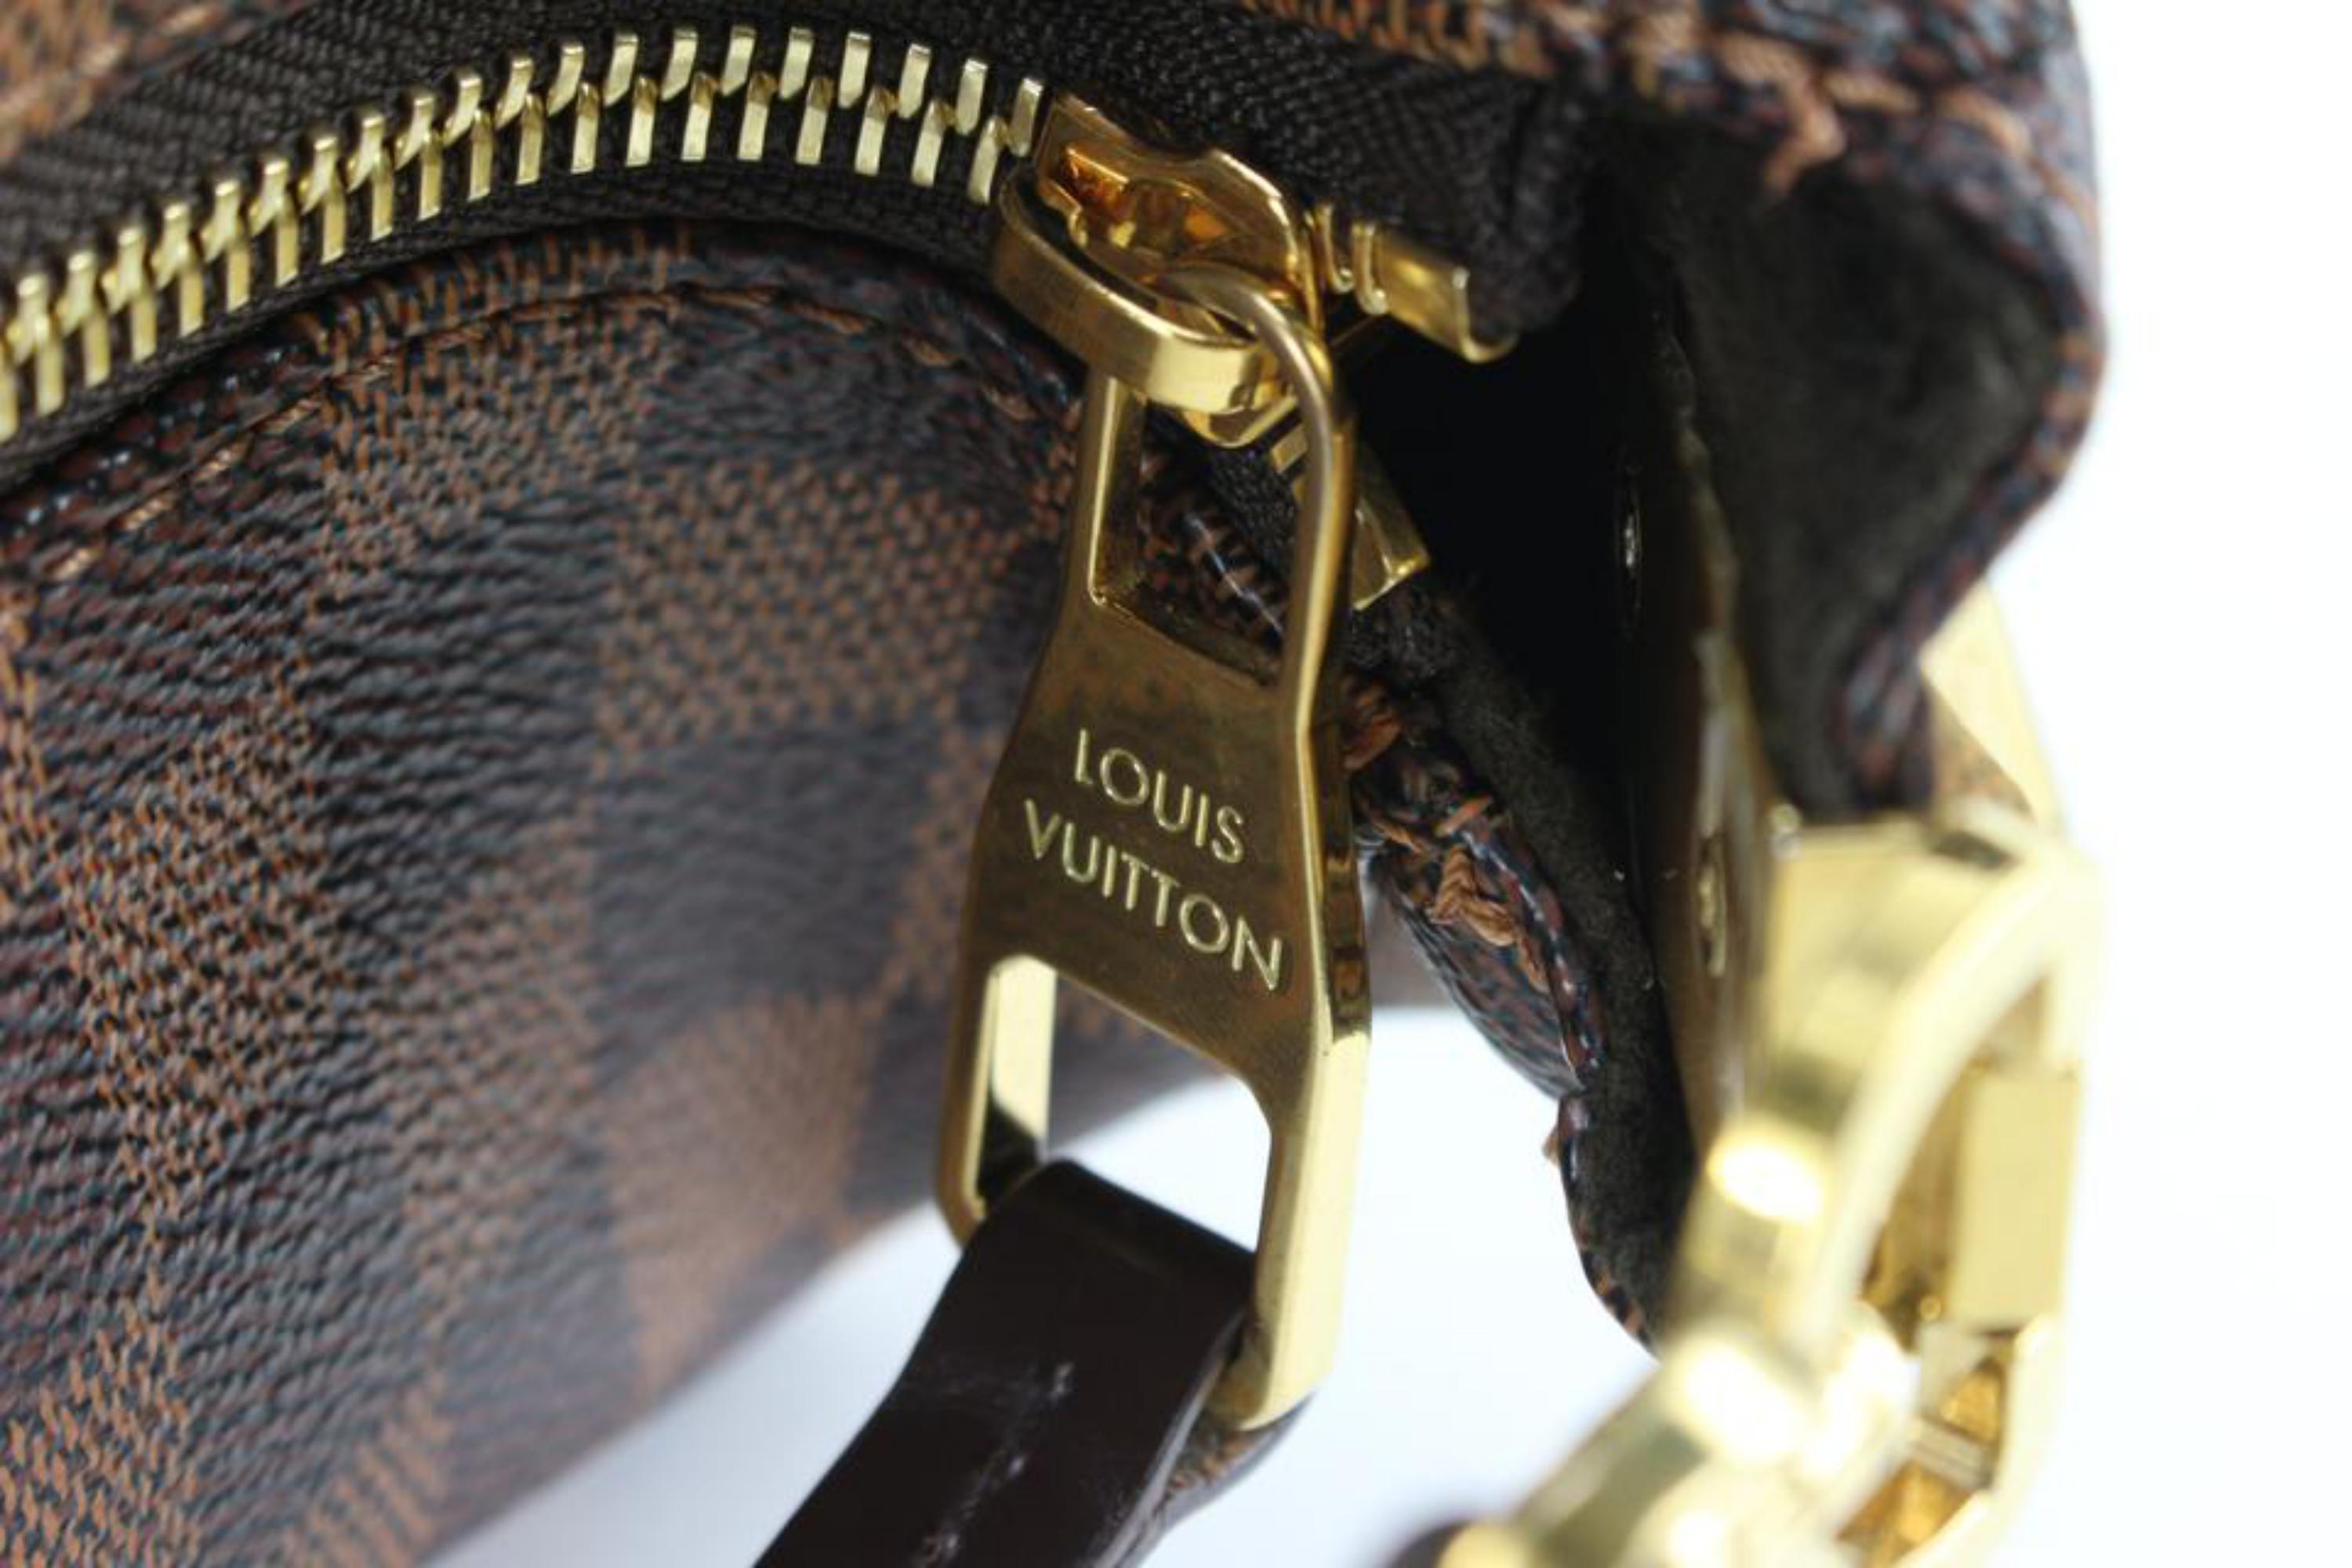 Authentic Louis Vuitton Portobello GM Damier Ebene Great Condition